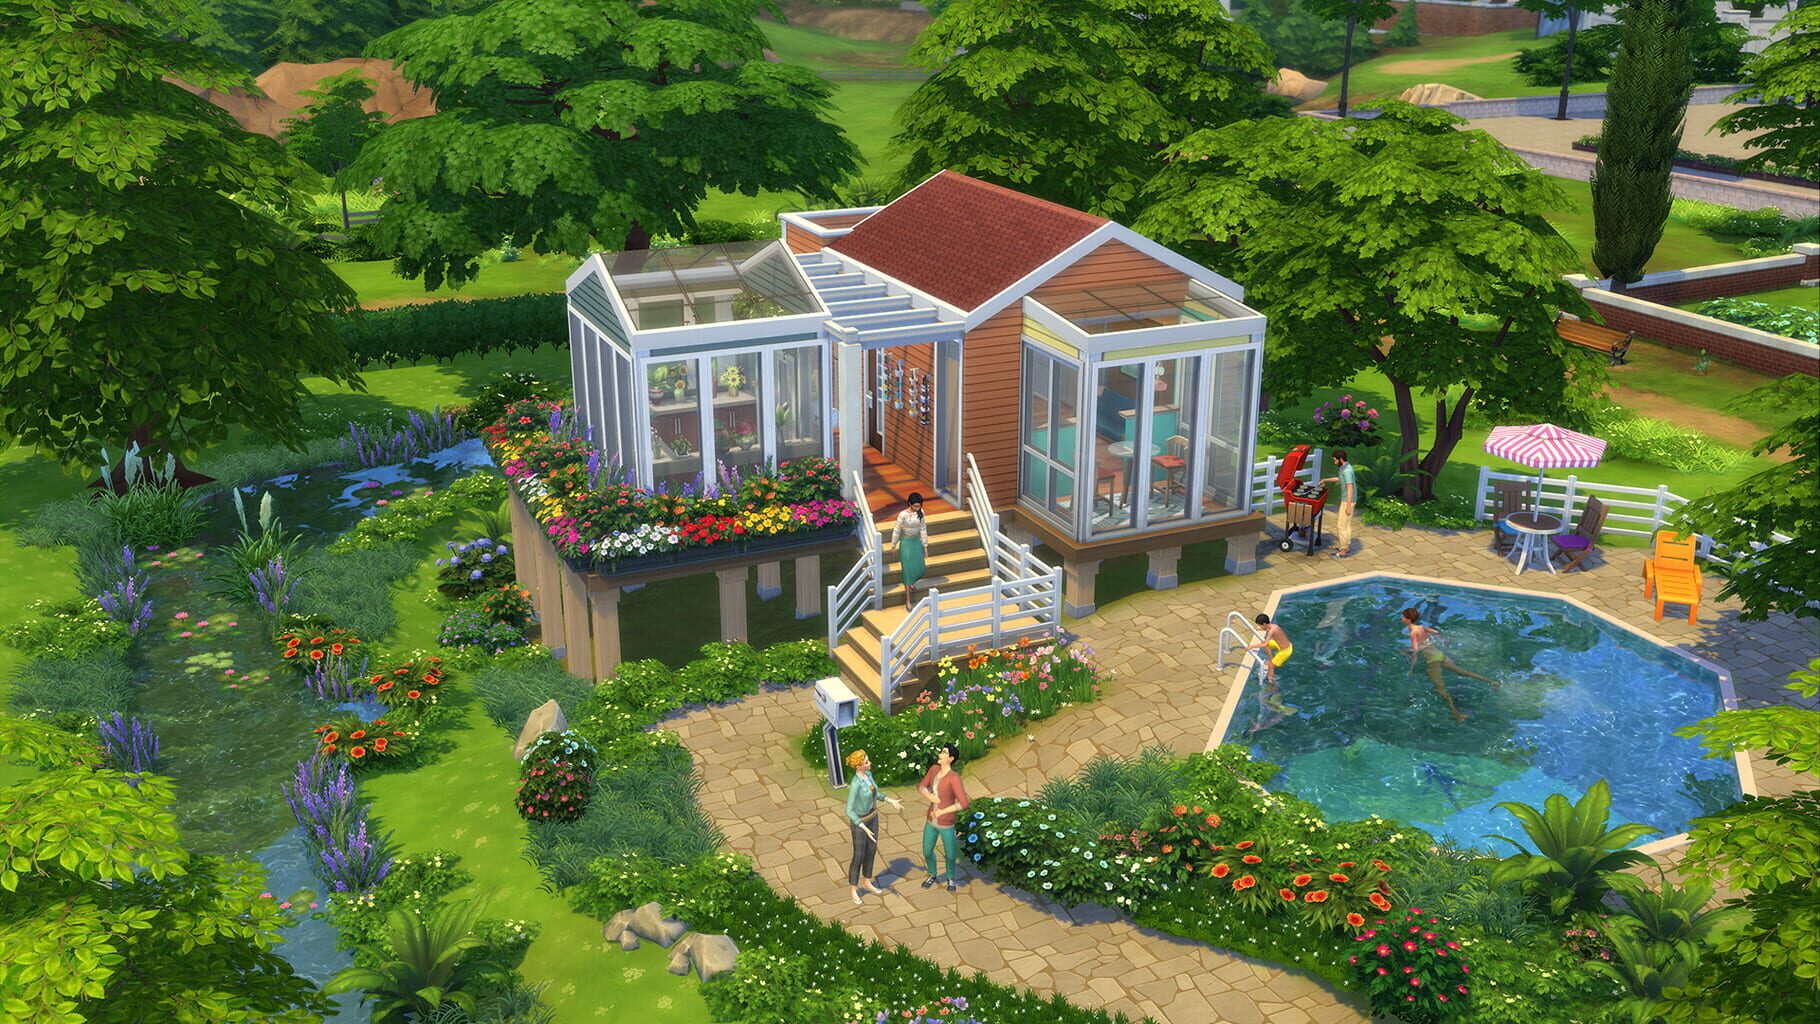 The Sims 4: Tiny Living Stuff Image